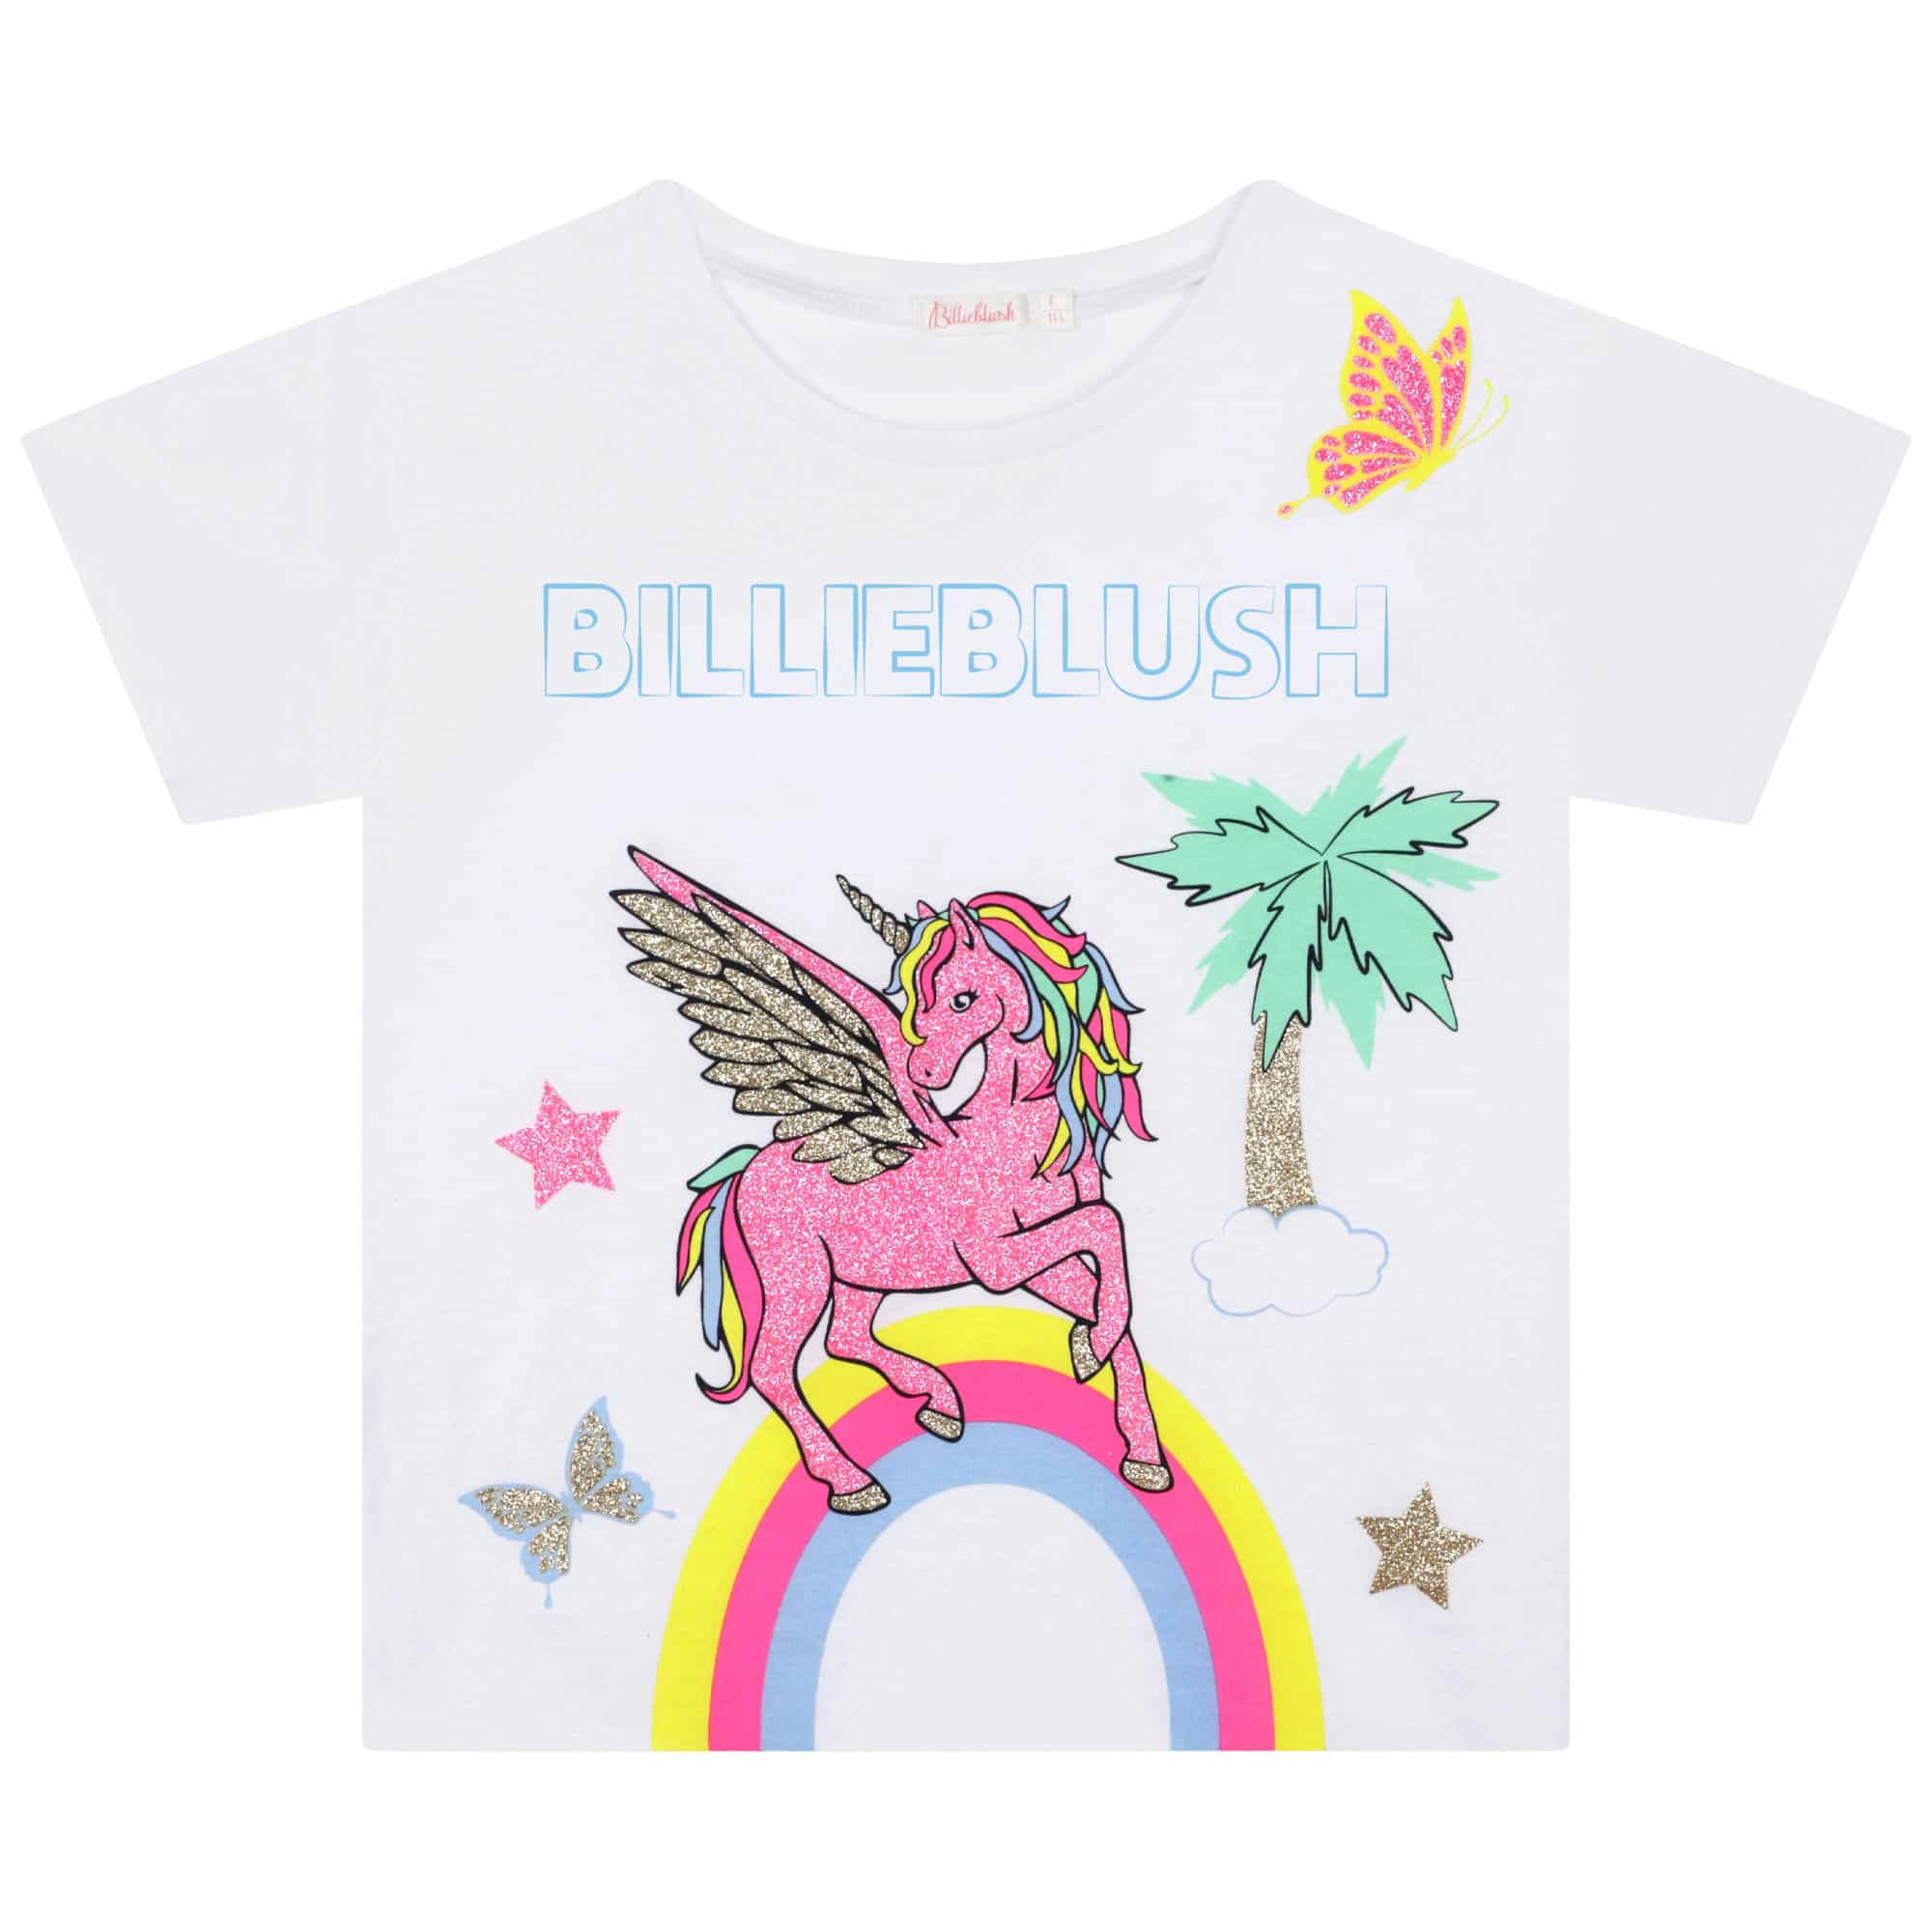 Billieblush girls unicorn tshirt with glitter detail